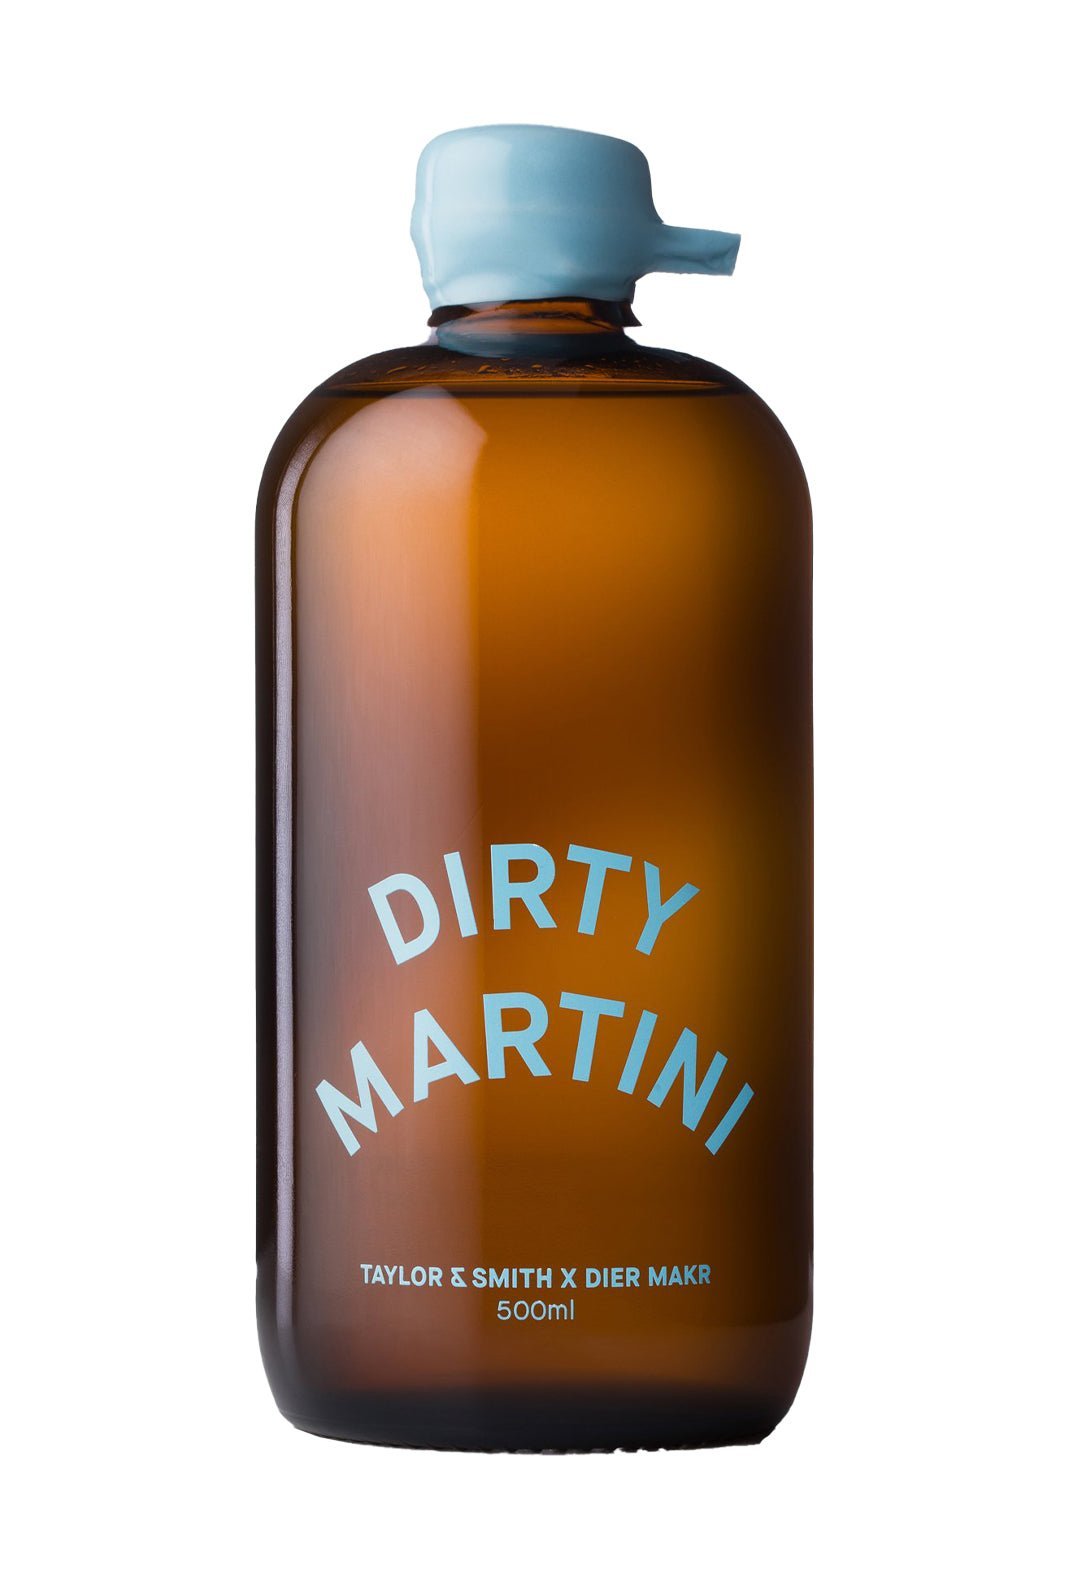 Taylor & Smith Dirty Martini 29.8% 500ml | Liquor & Spirits | Shop online at Spirits of France